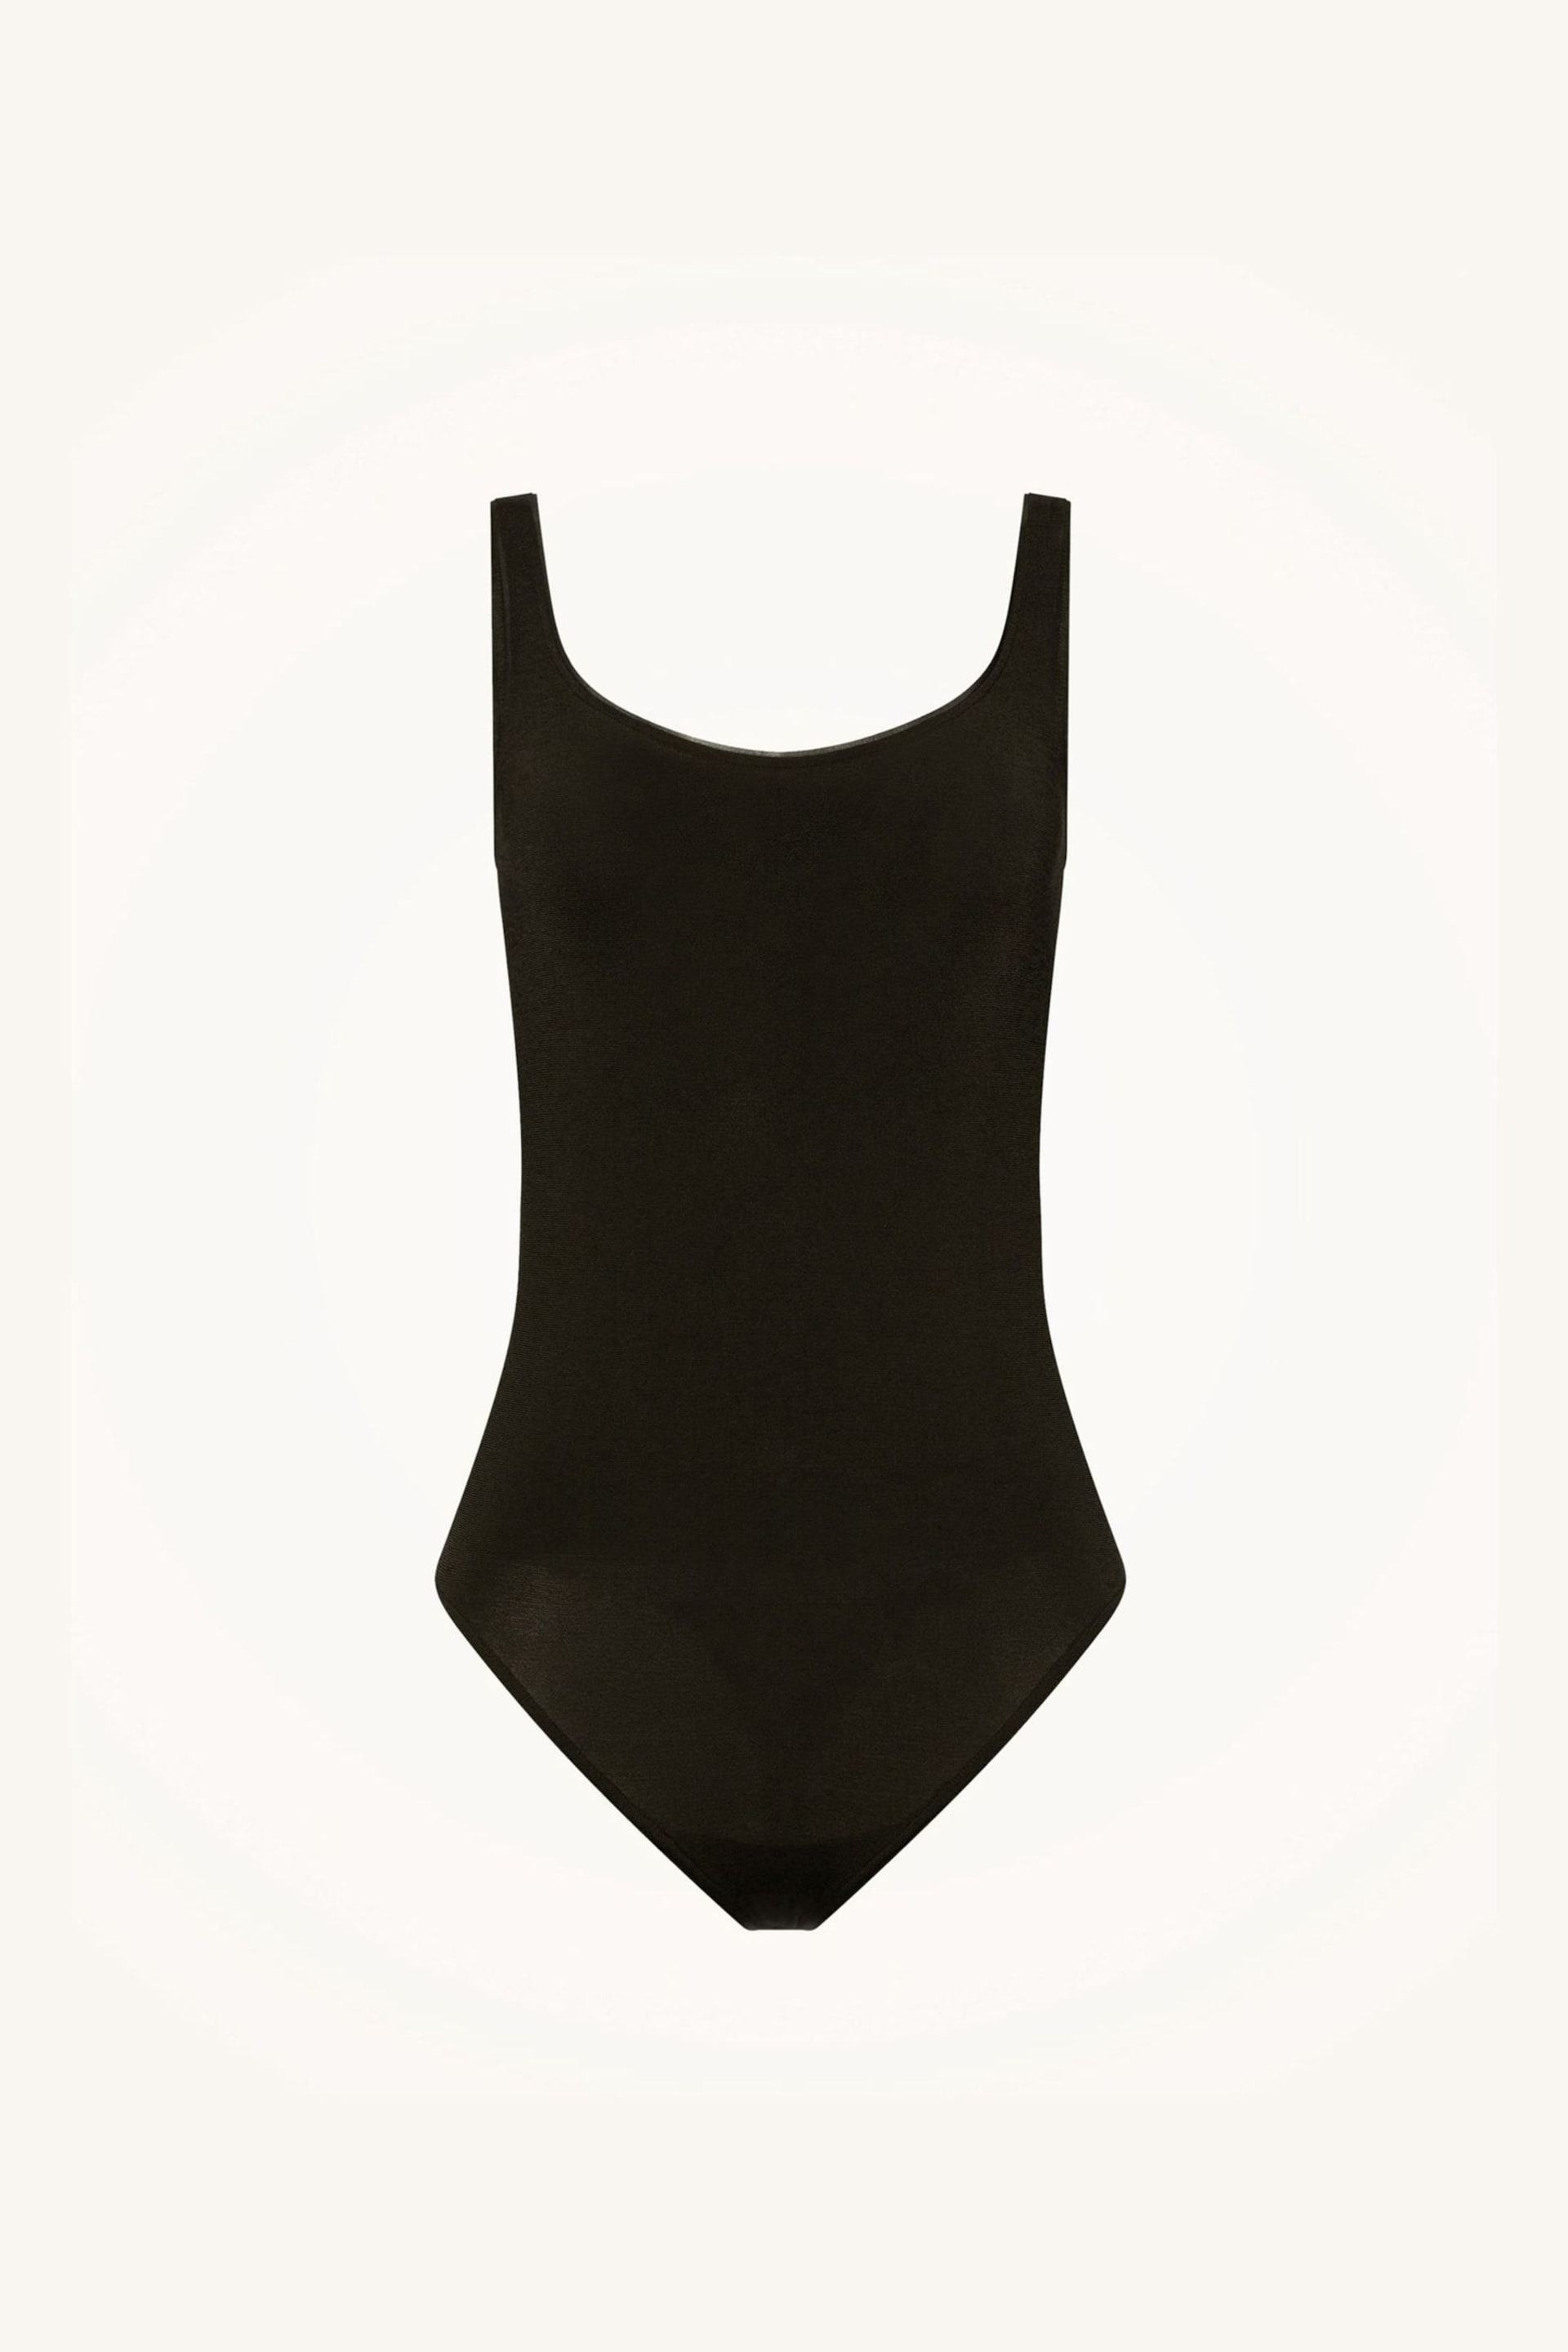 Wolford Black Jamaika Vest String Bodysuit - Image 4 of 5